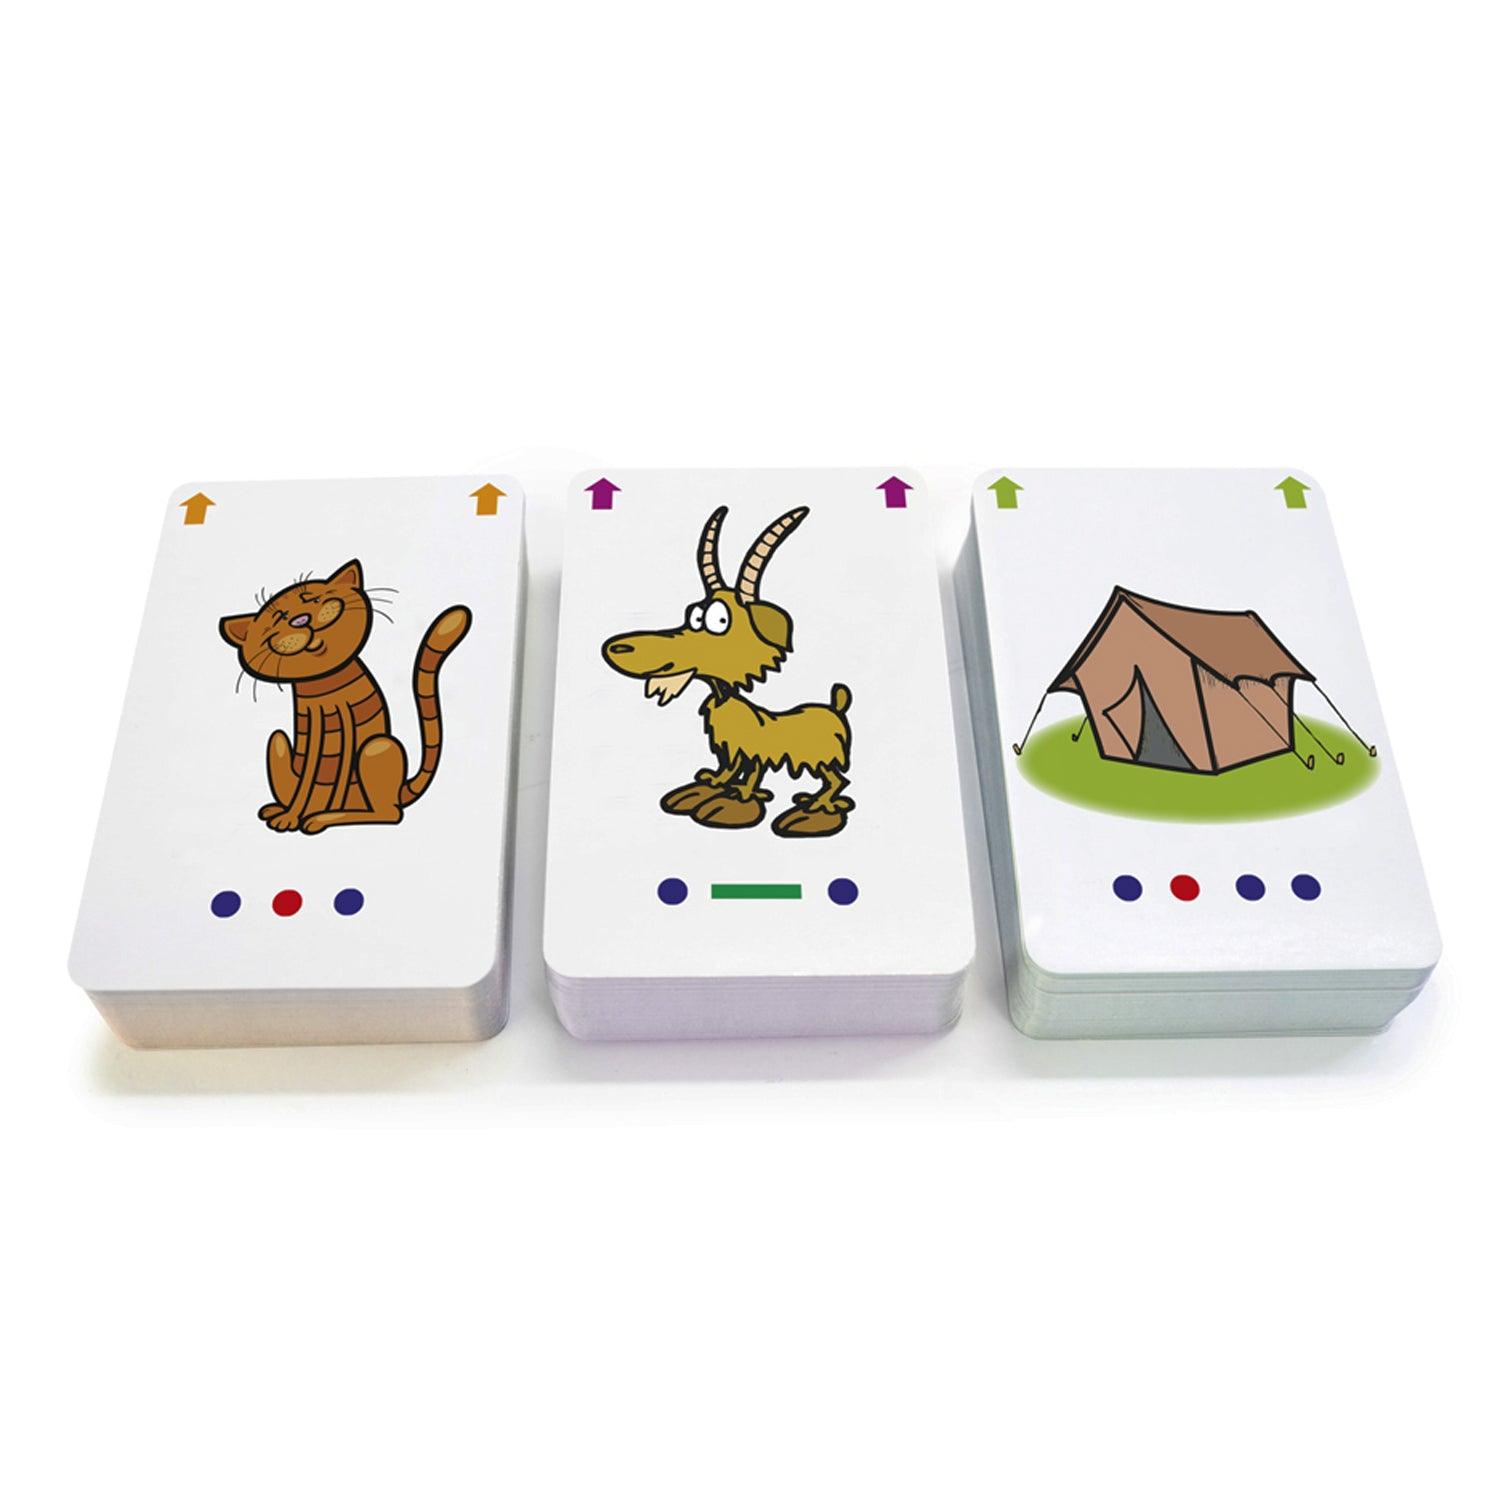 Decoding Flashcards, 3 Sets Per Pack, 3 Packs - Loomini